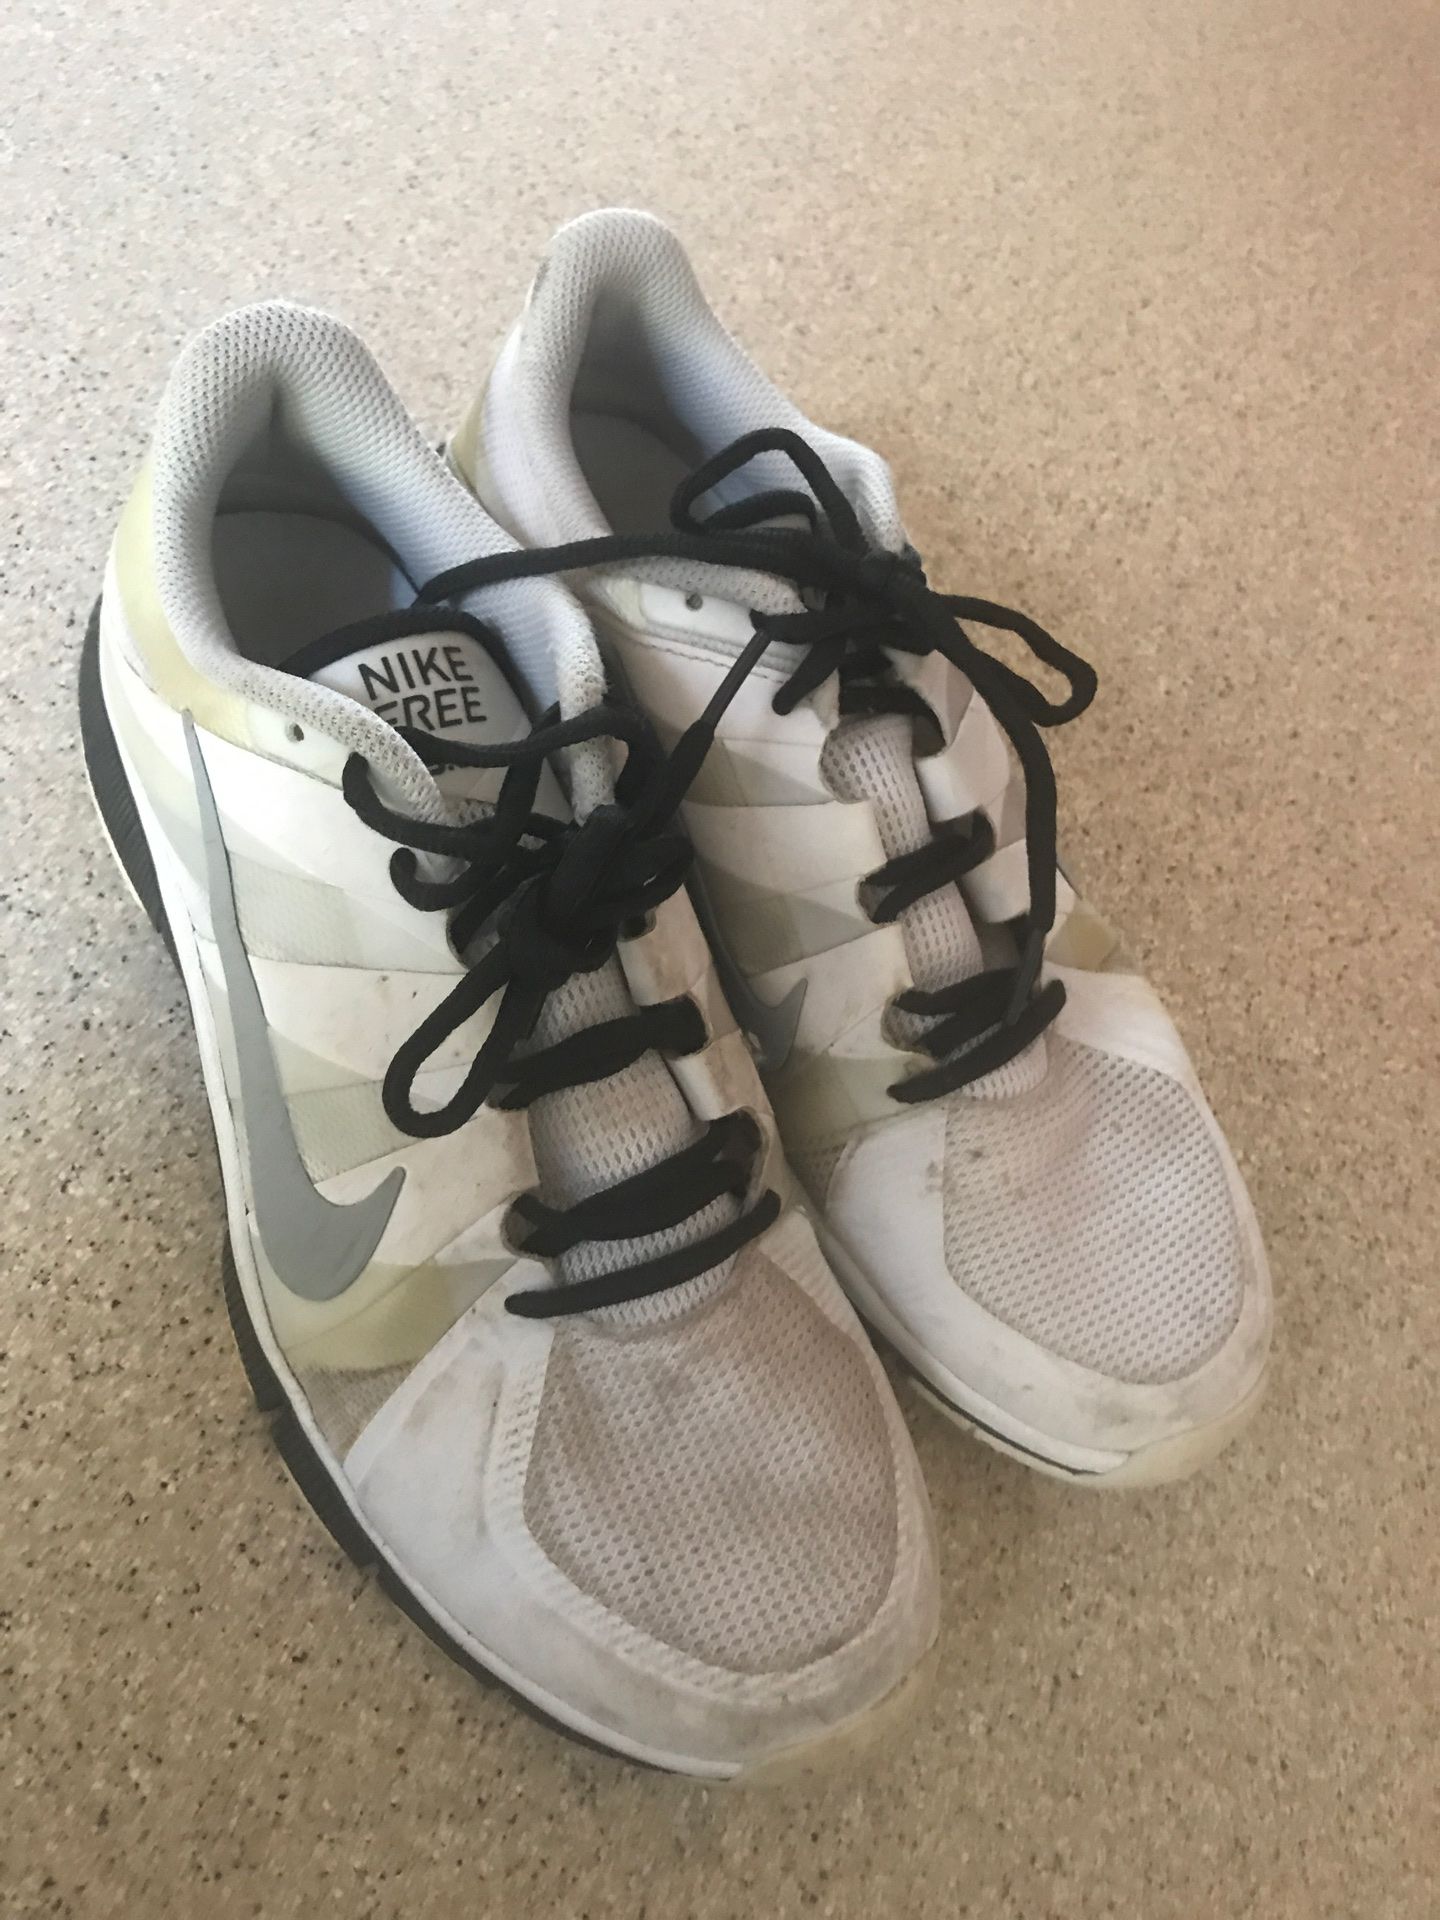 Nike mens shoes tennis size 8